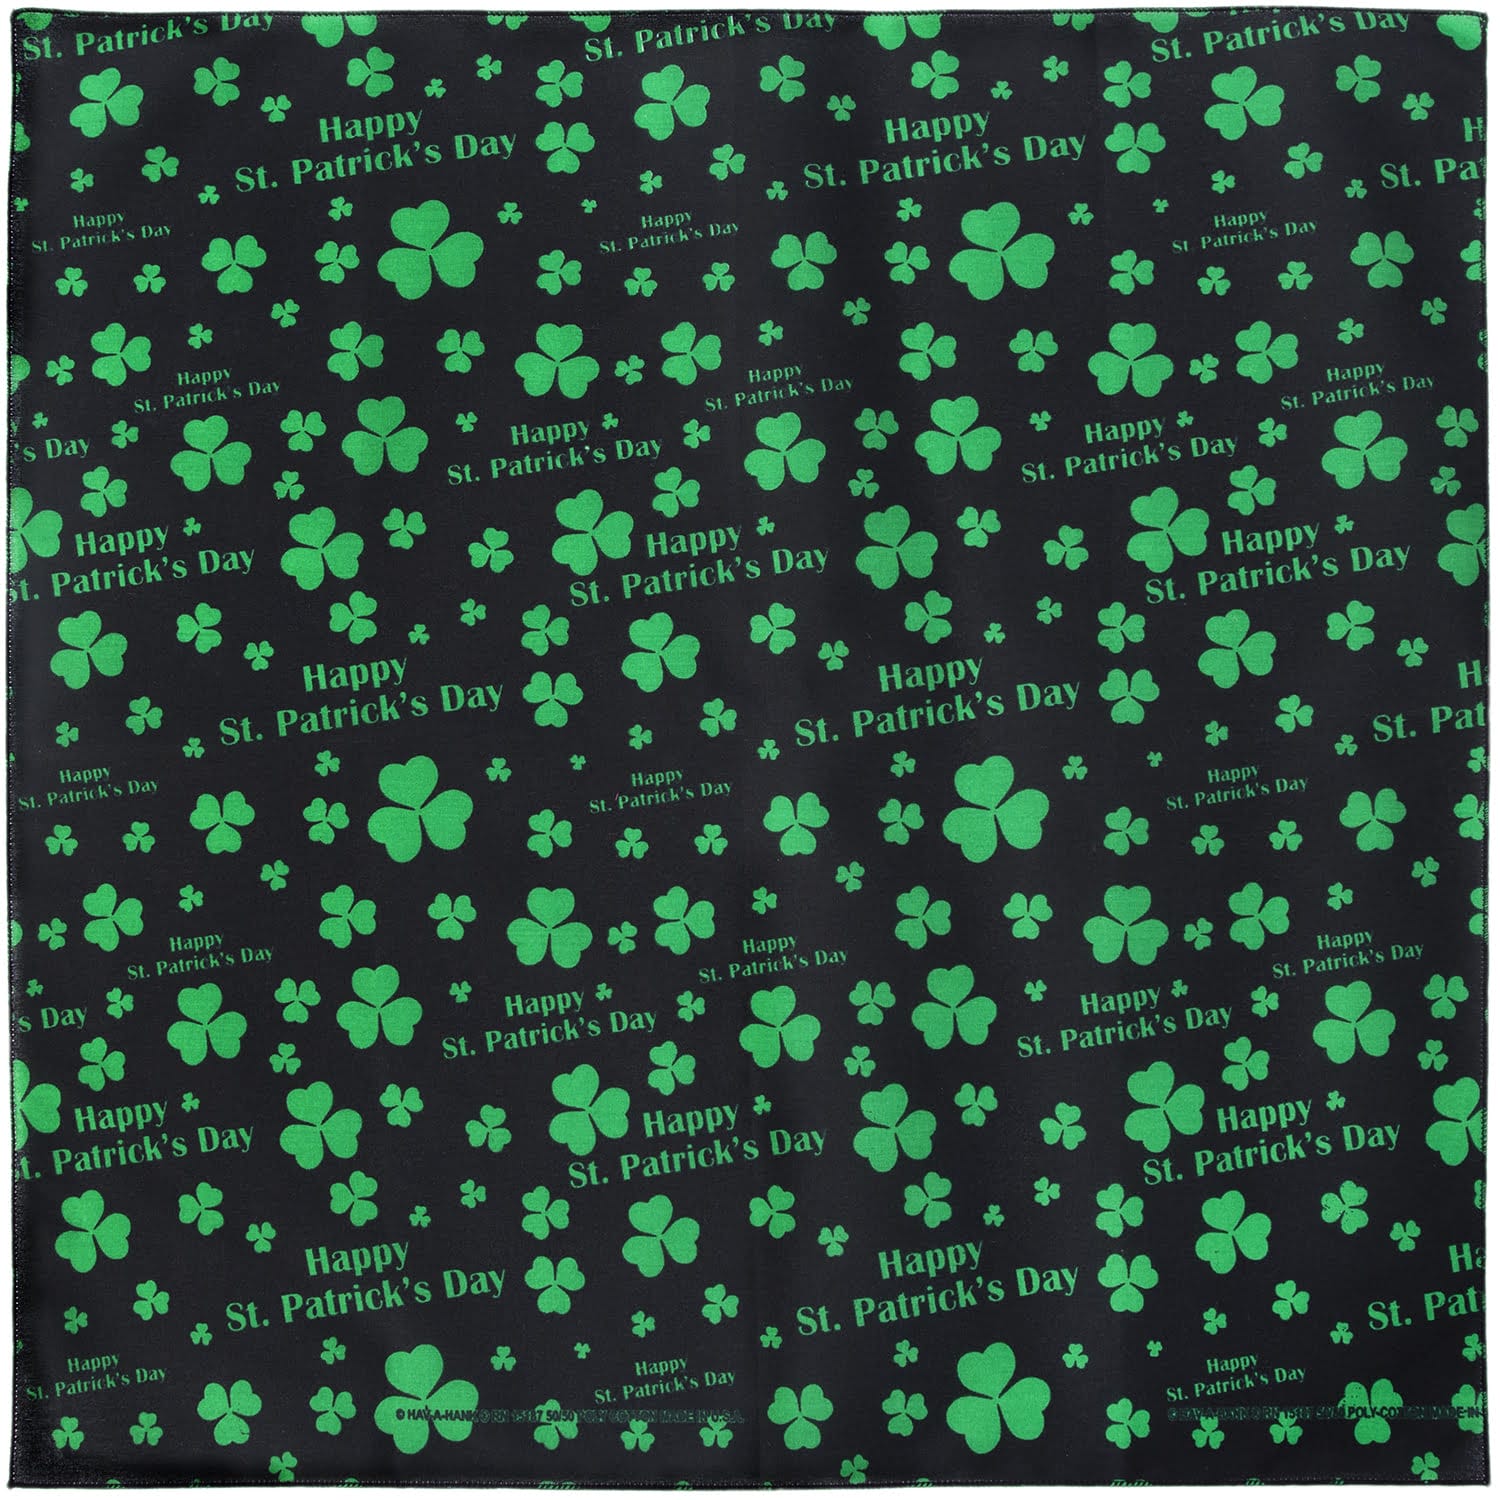 Happy St. Patrick's Day - Black Bandana - Single Piece 22x22 inch